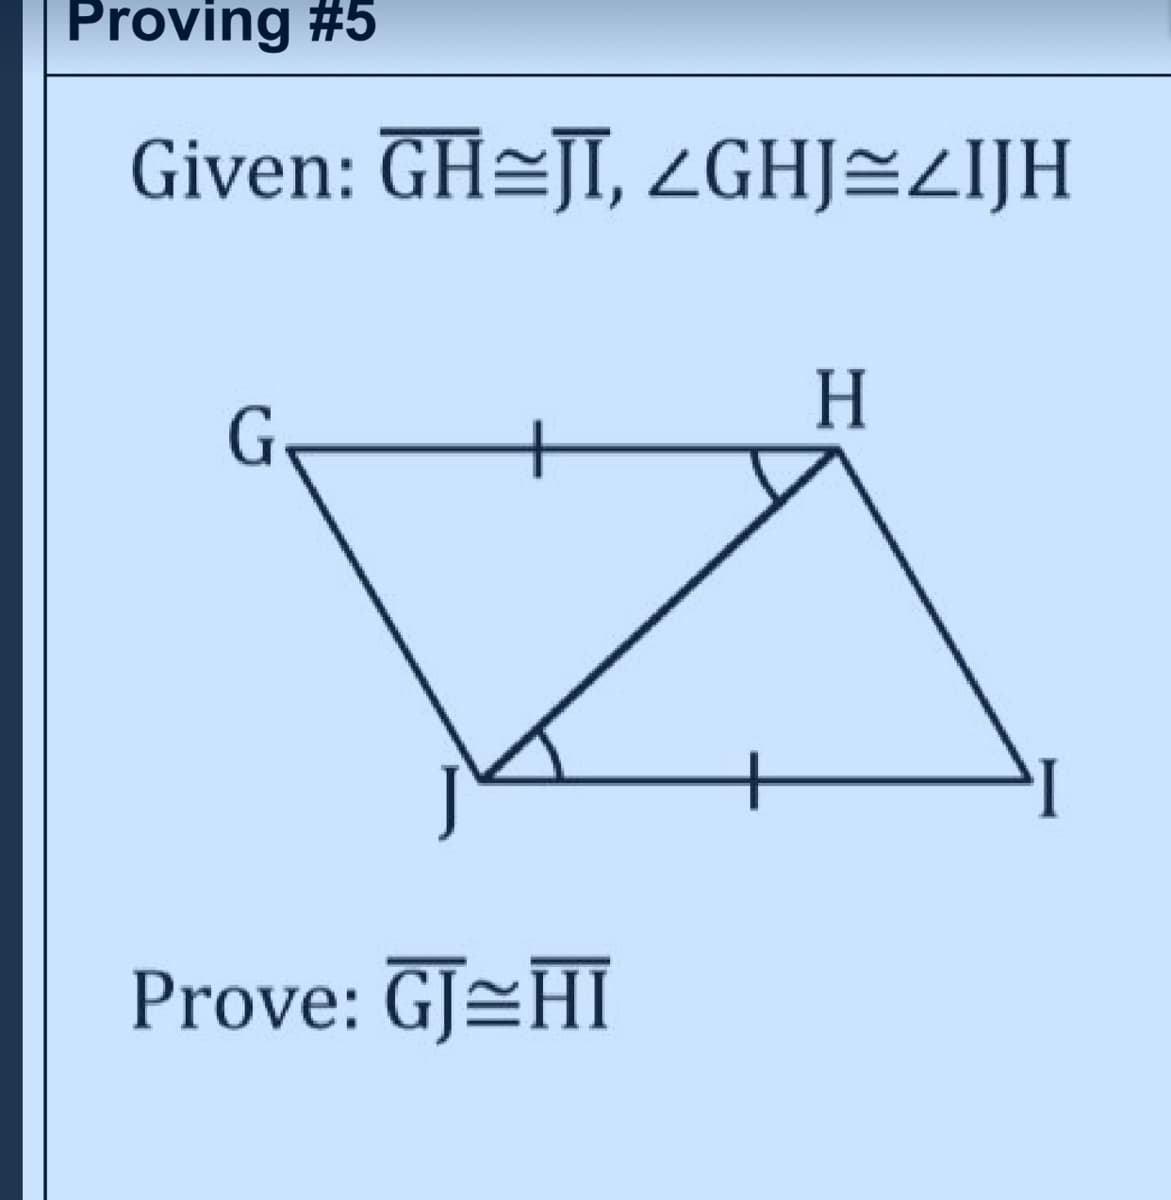 Proving #5
Given: GH=JI, GHJ=ZIJH
H
G,
Prove: GJ=HI
